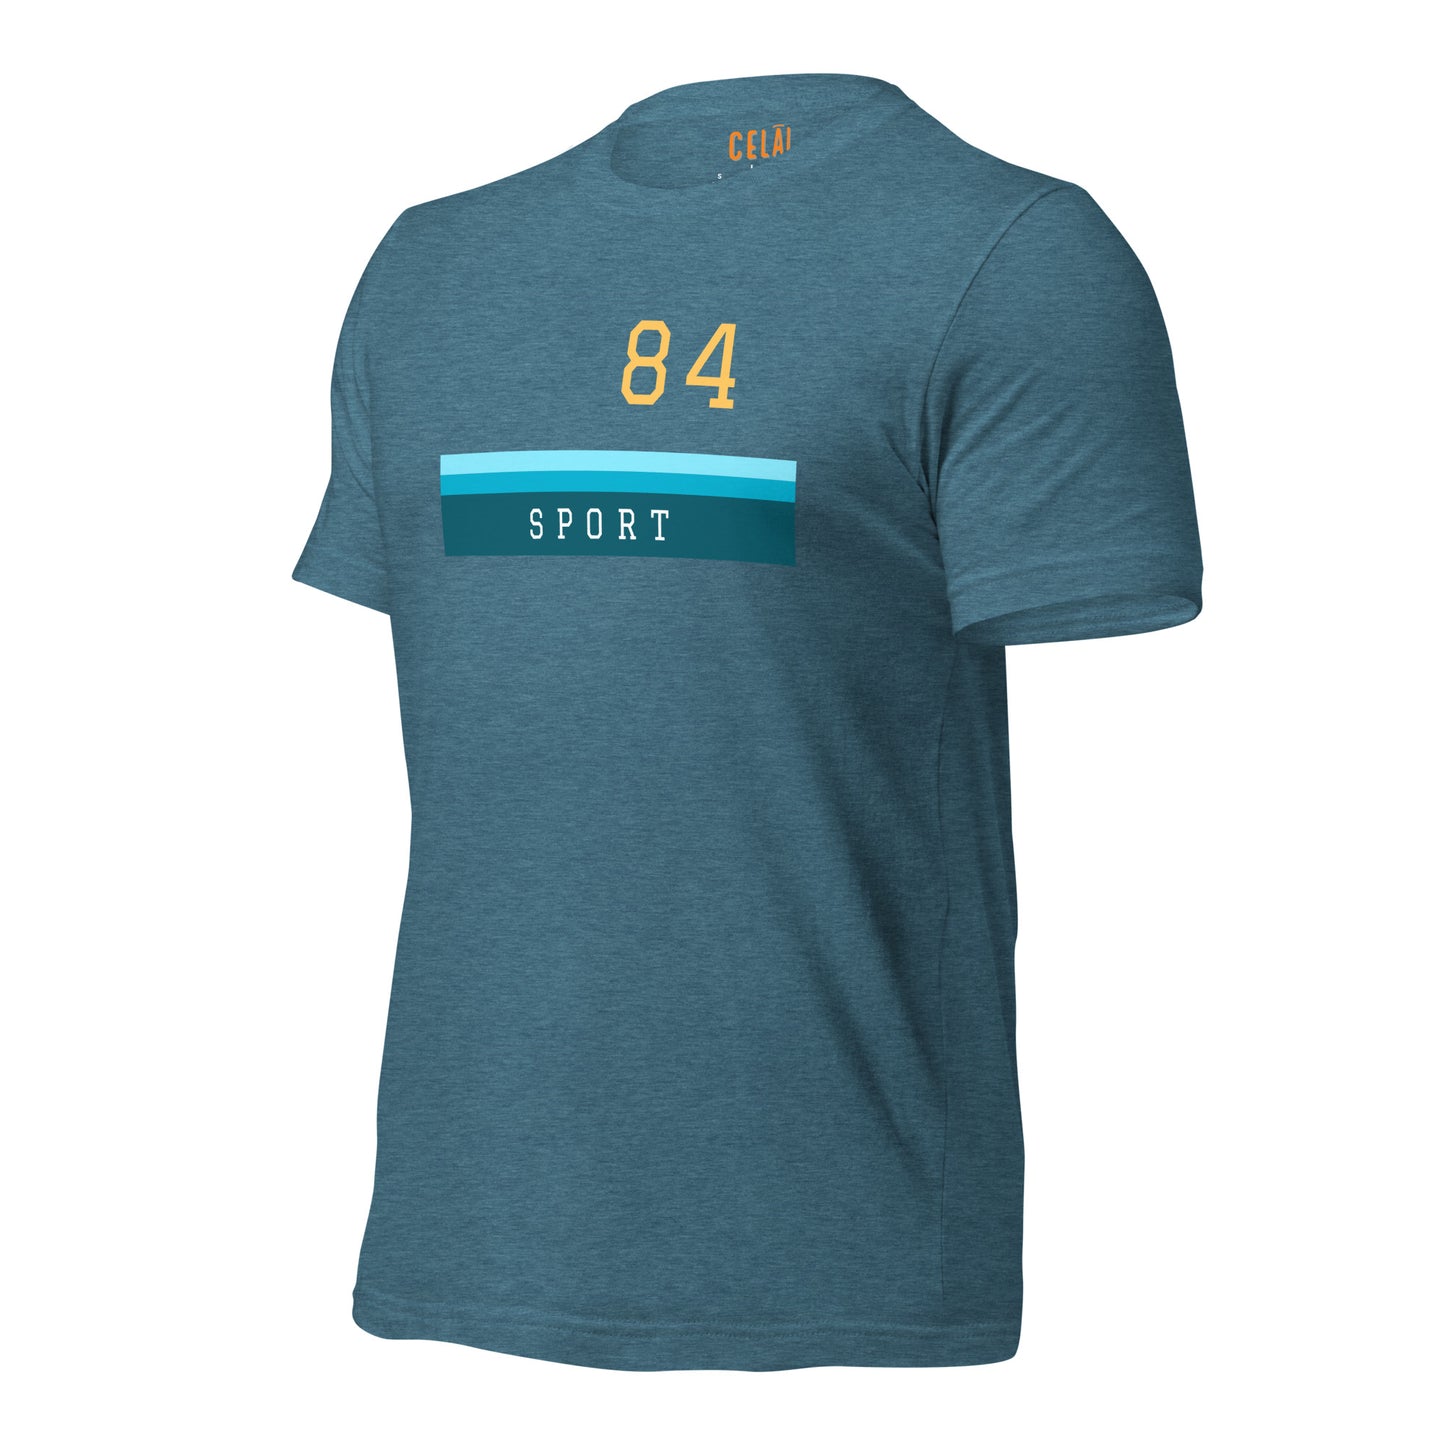 84 Unisex t-shirt